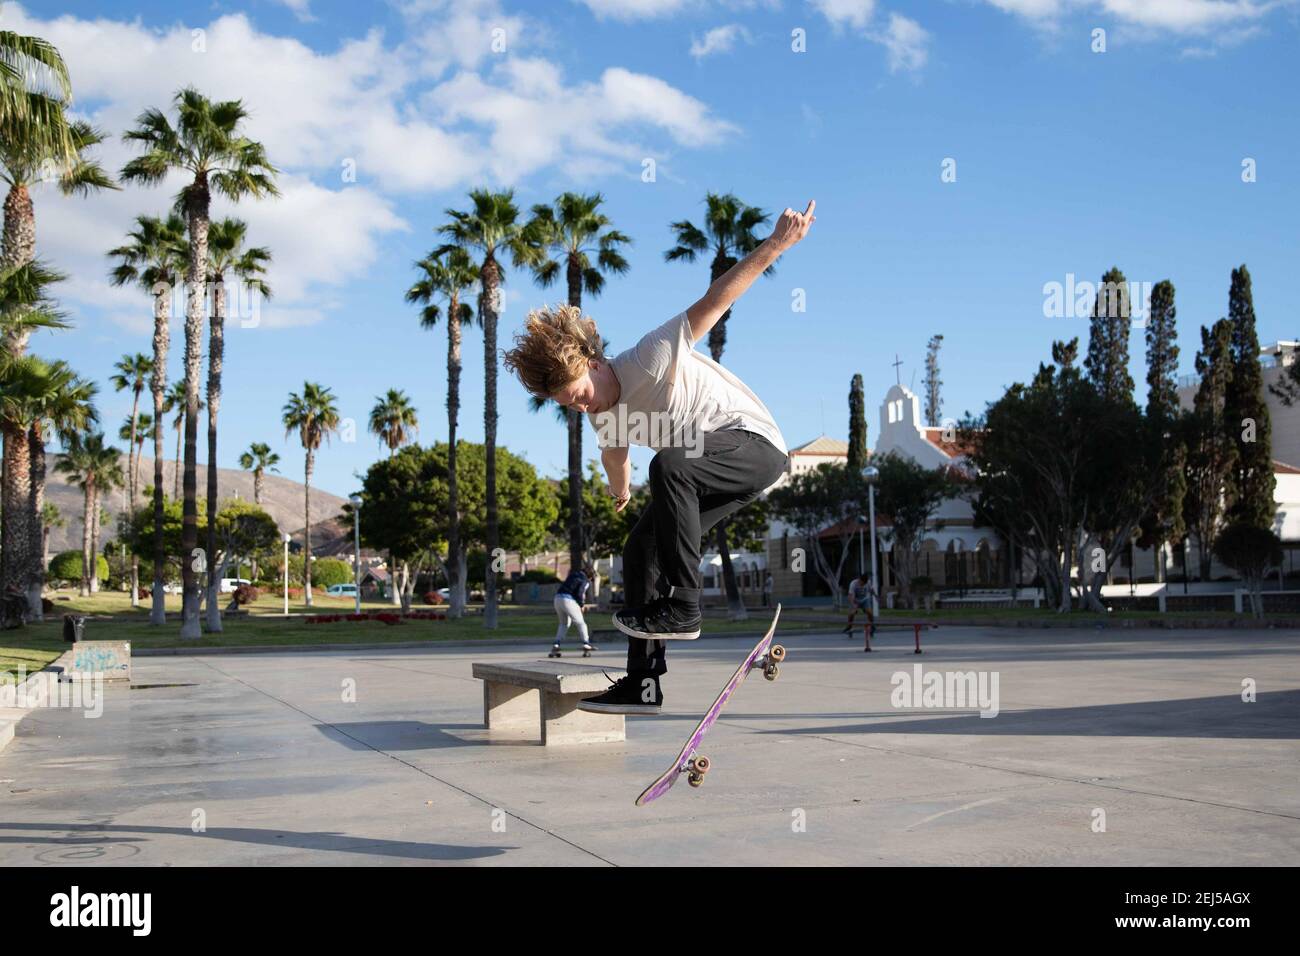 Skater perform a kickflip while riding his skateboard at the skatepark Stock Photo